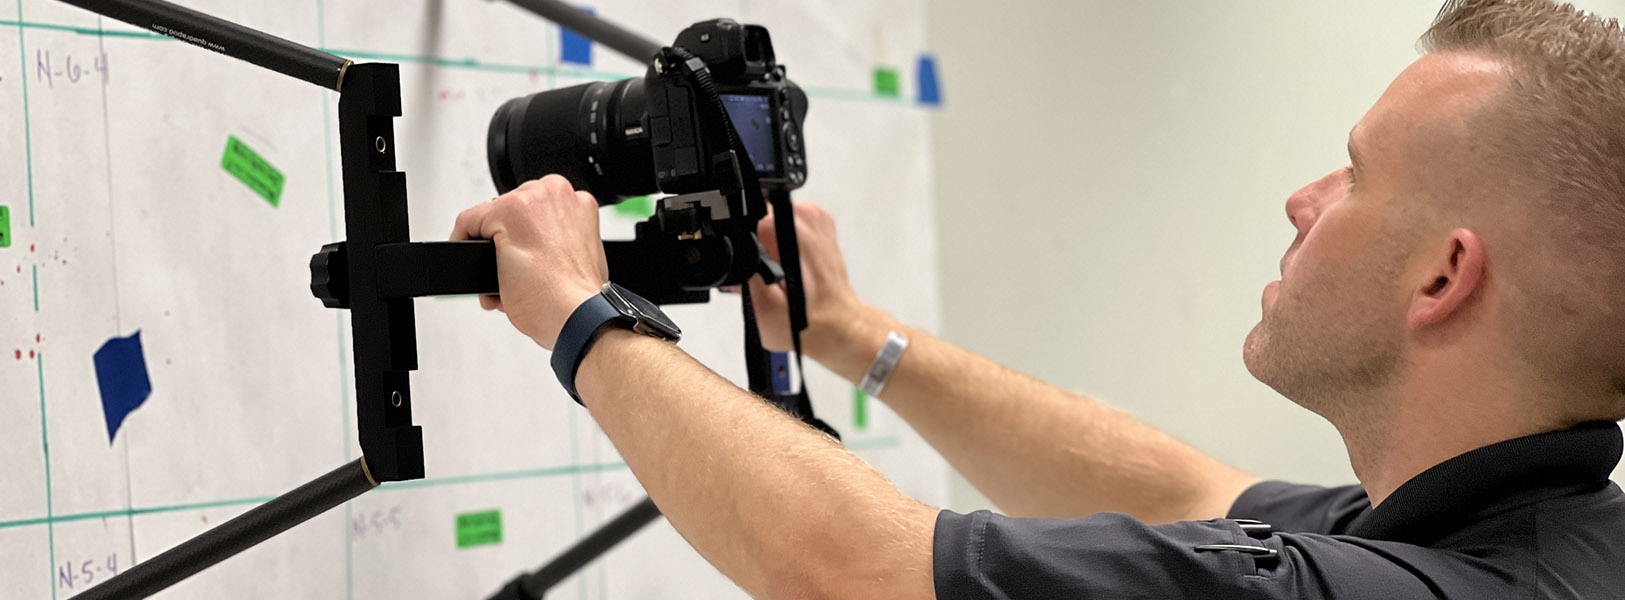 Man uses digital camera to photograph diagrams on wall